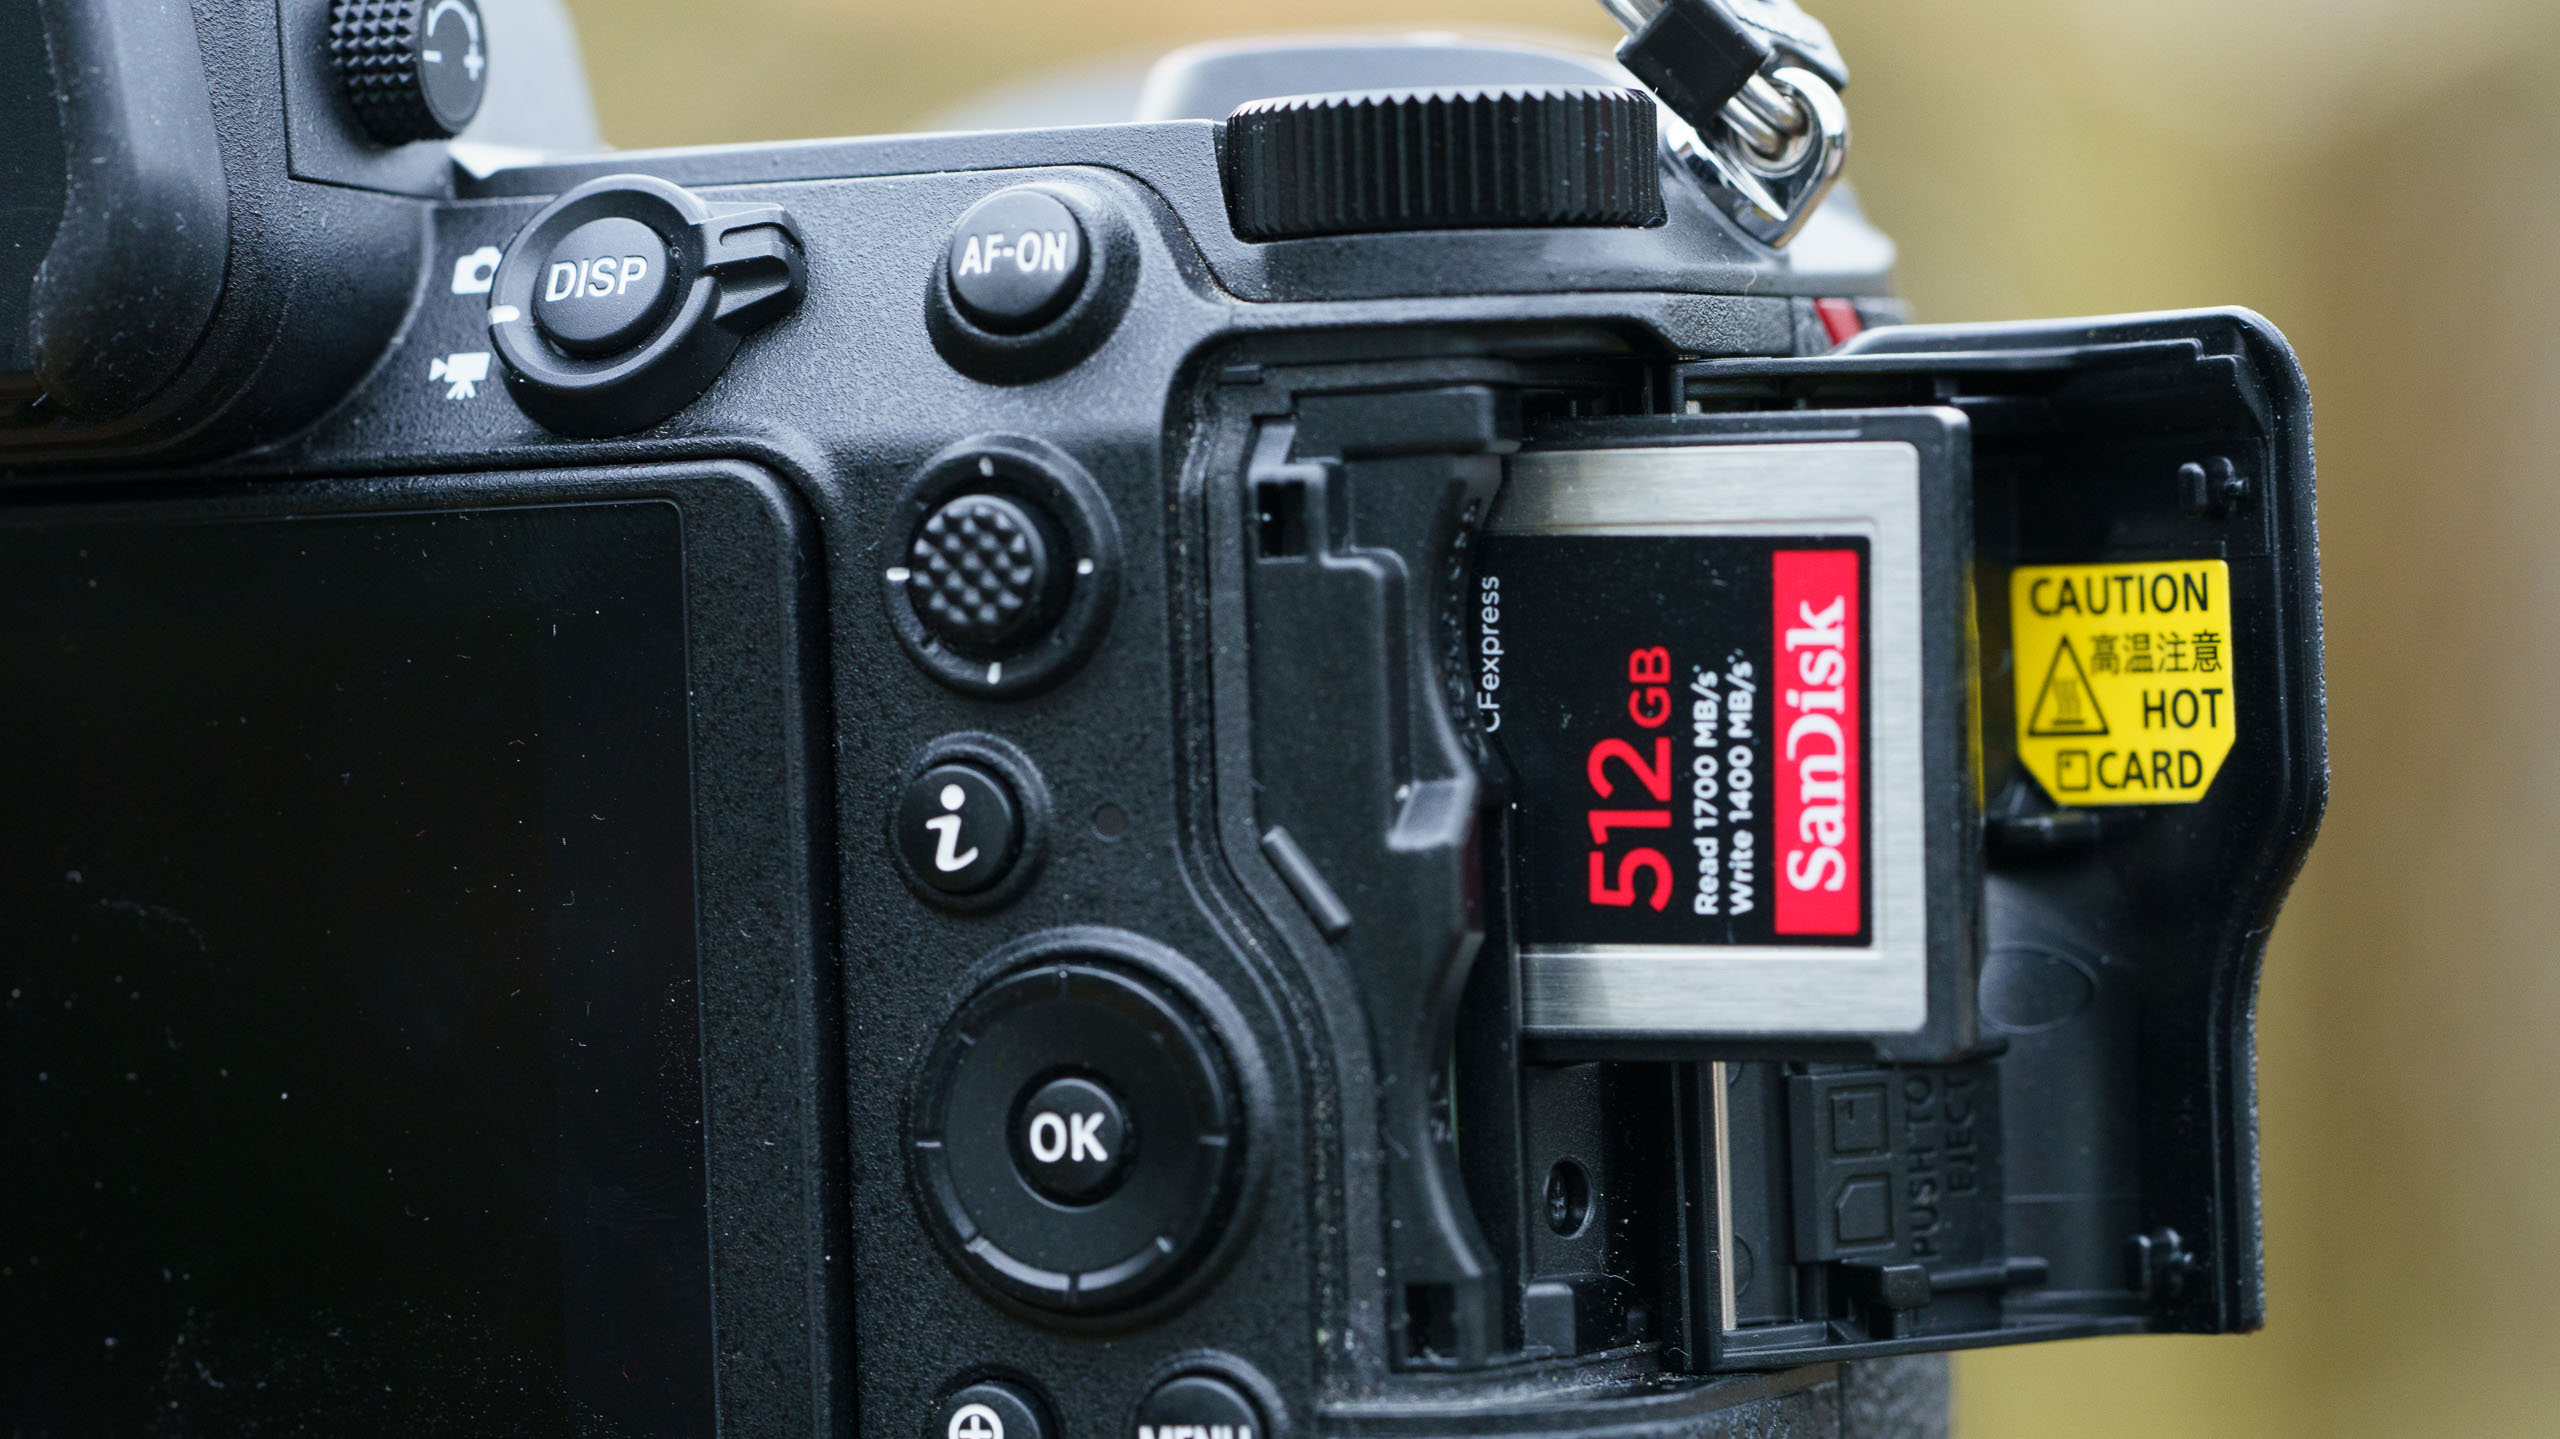 SanDisk 64GB SD Card SDXC SDHC MEMORY CARD Class 4,64 GB For Digital Cameras-UK 